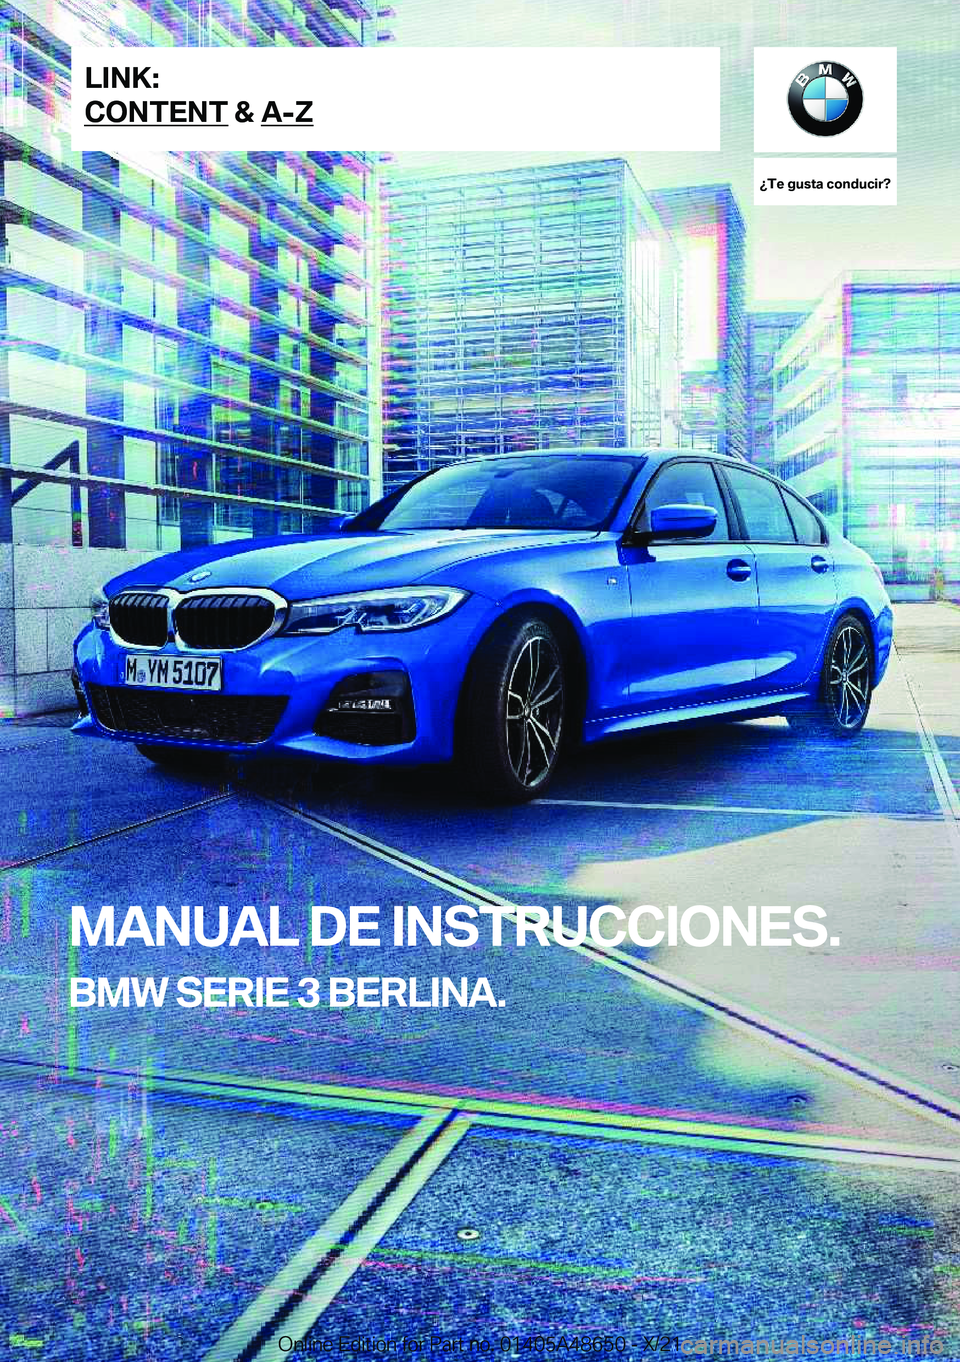 BMW 3 SERIES 2022  Manuales de Empleo (in Spanish) ��T�e��g�u�s�t�a��c�o�n�d�u�c�i�r� 
�M�A�N�U�A�L��D�E��I�N�S�T�R�U�C�C�I�O�N�E�S�.
�B�M�W��S�E�R�I�E��3��B�E�R�L�I�N�A�.�L�I�N�K�:
�C�O�N�T�E�N�T��&��A�-�Z�O�n�l�i�n�e��E�d�i�t�i�o�n��f�o�